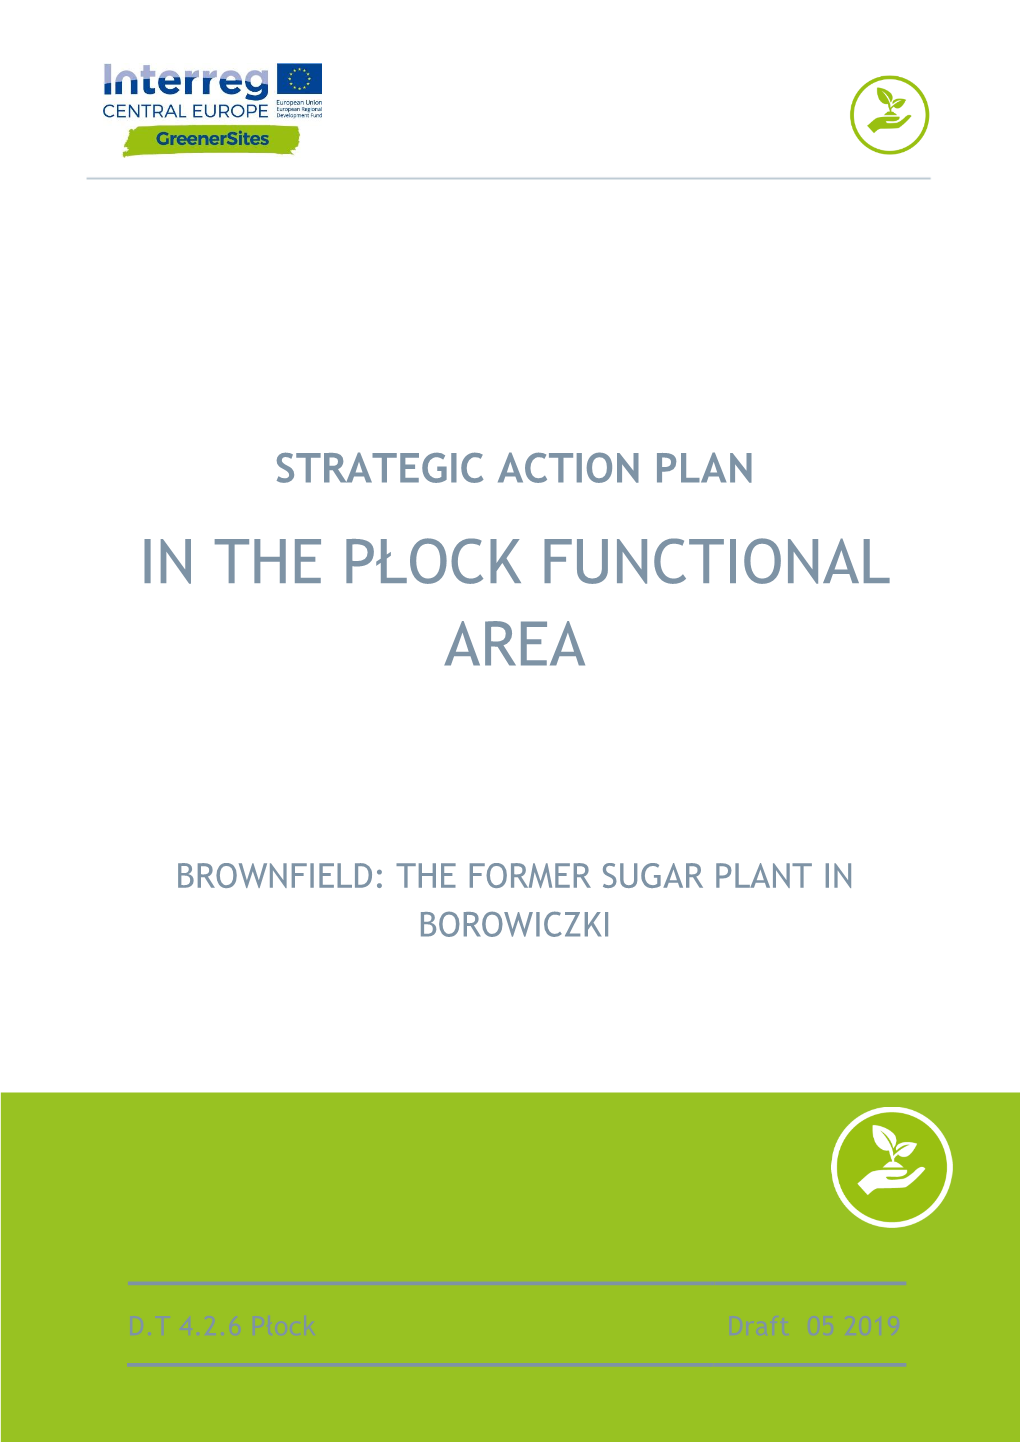 Strategic Action Plan Plock, Pdf 0.5 MB